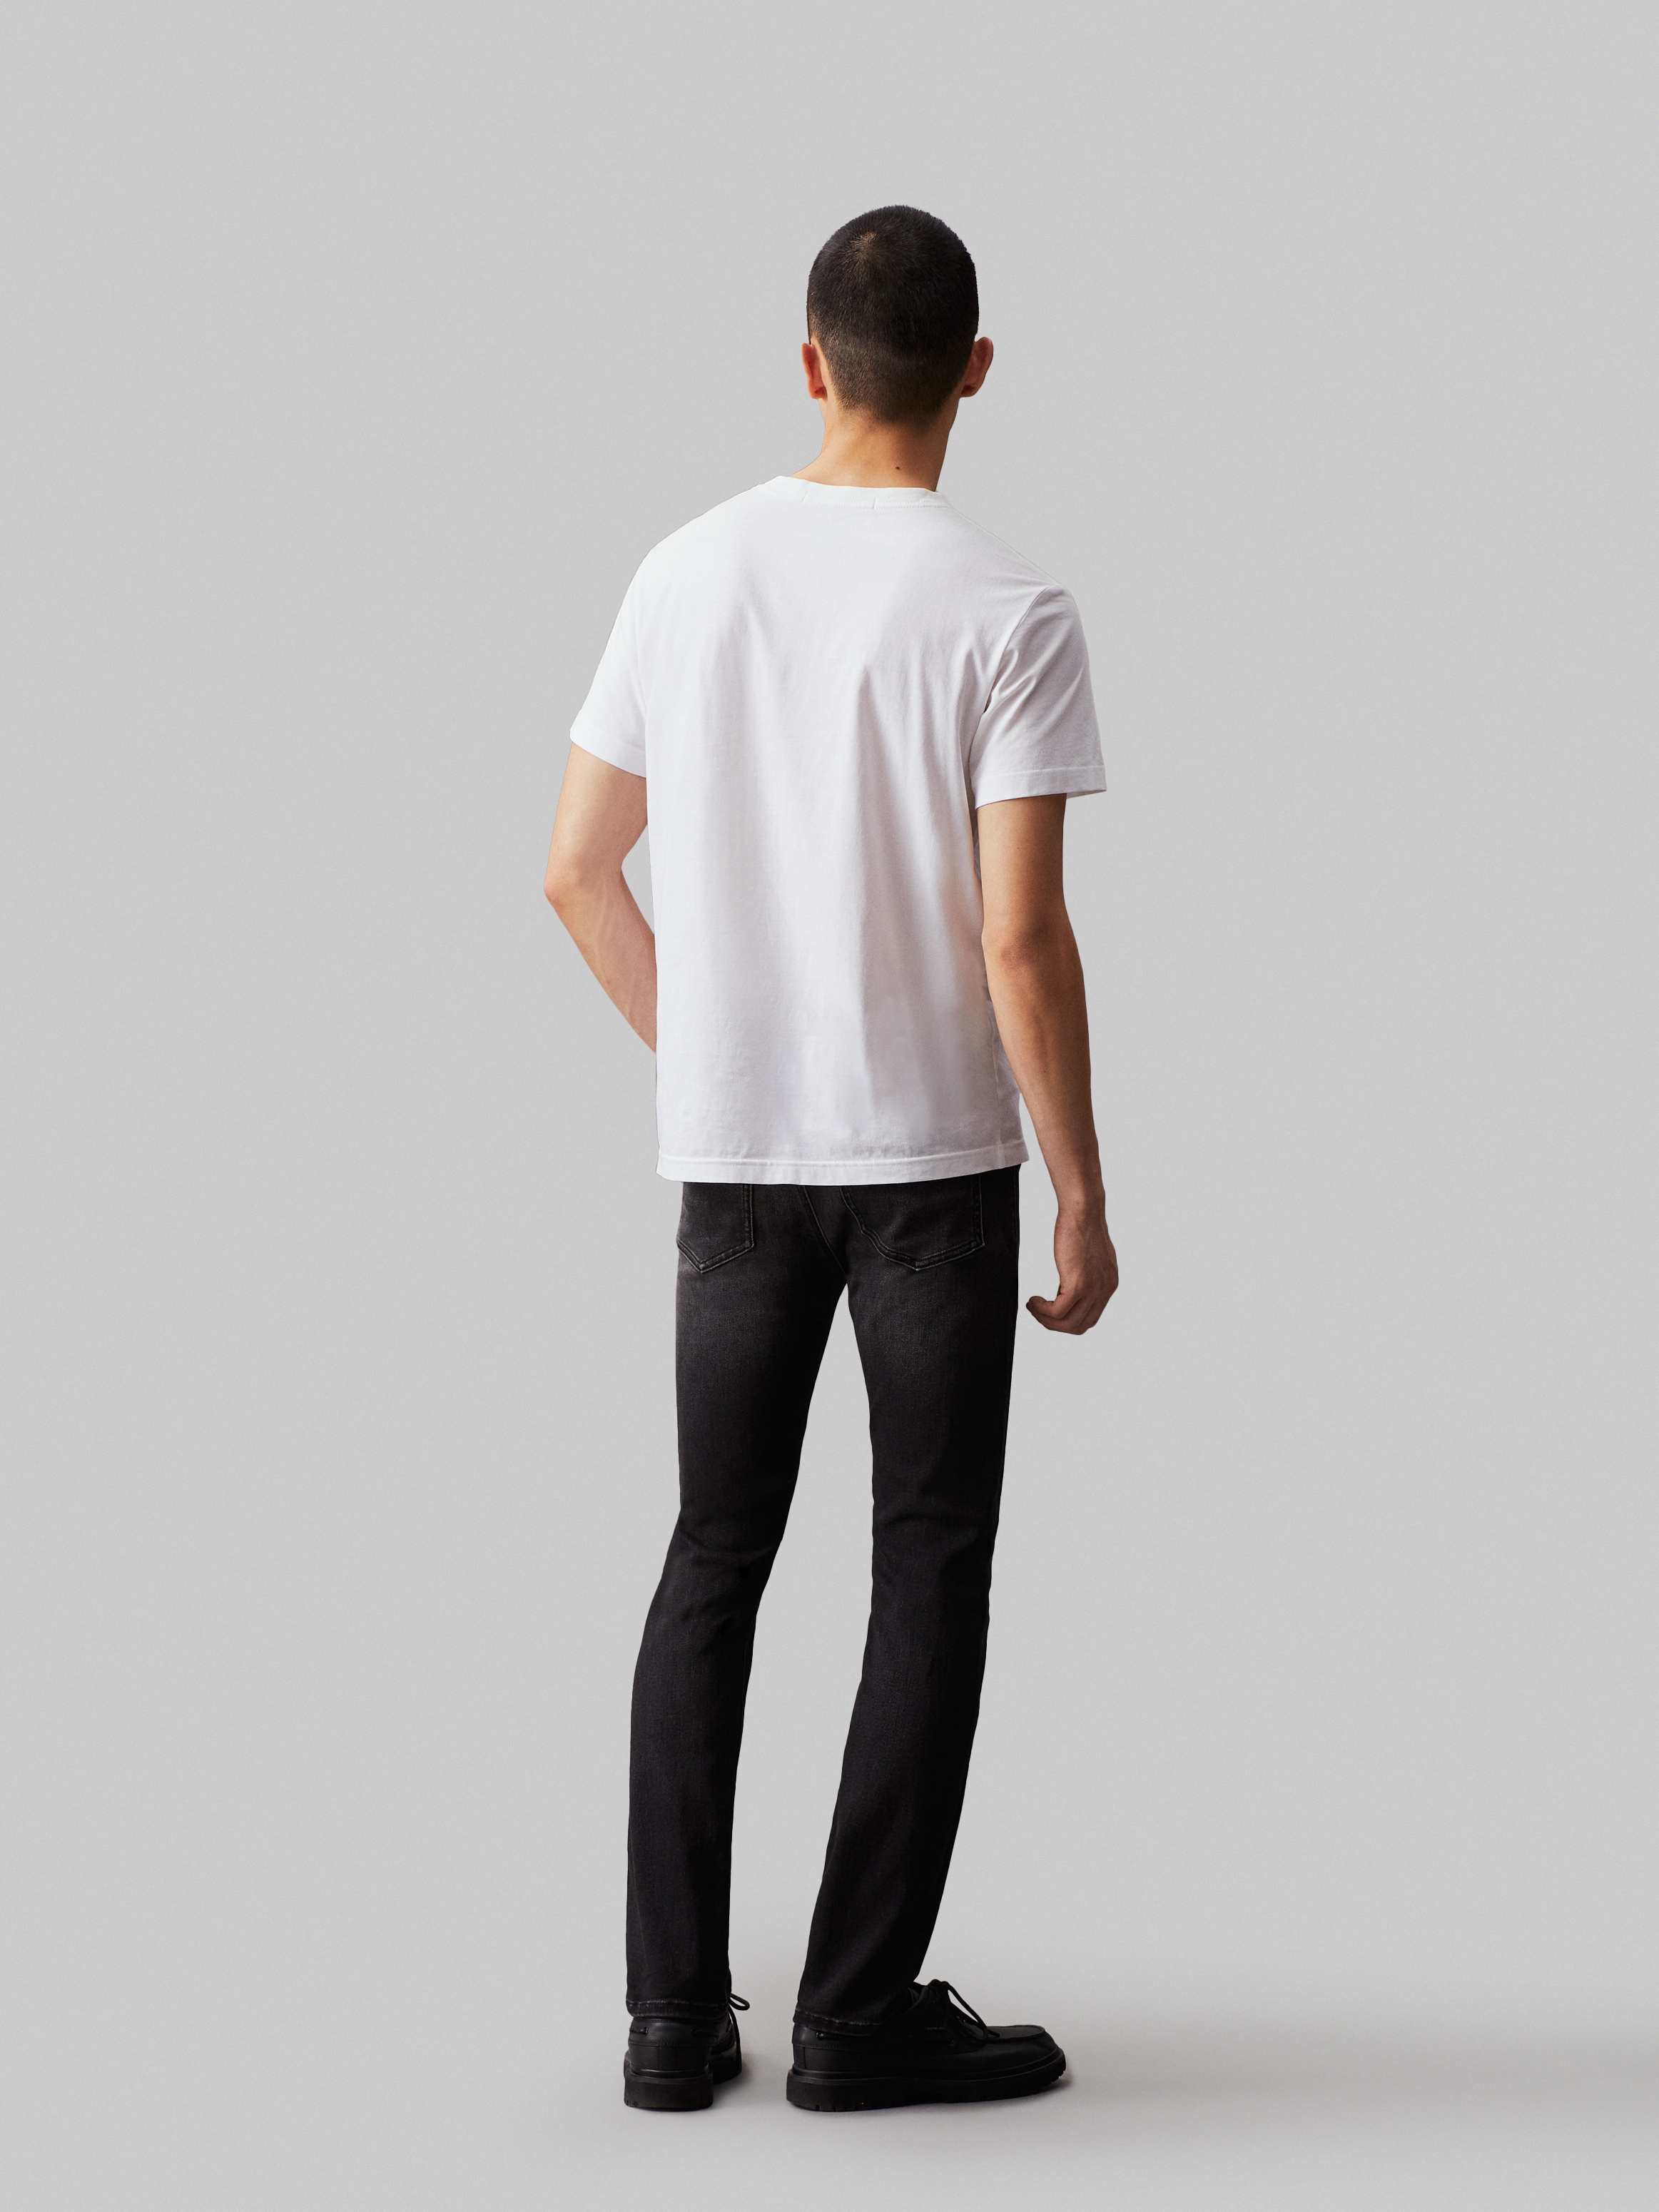 Calvin Klein Jeans Skinny-fit-Jeans »SKINNY«, im 5-Pocket-Style